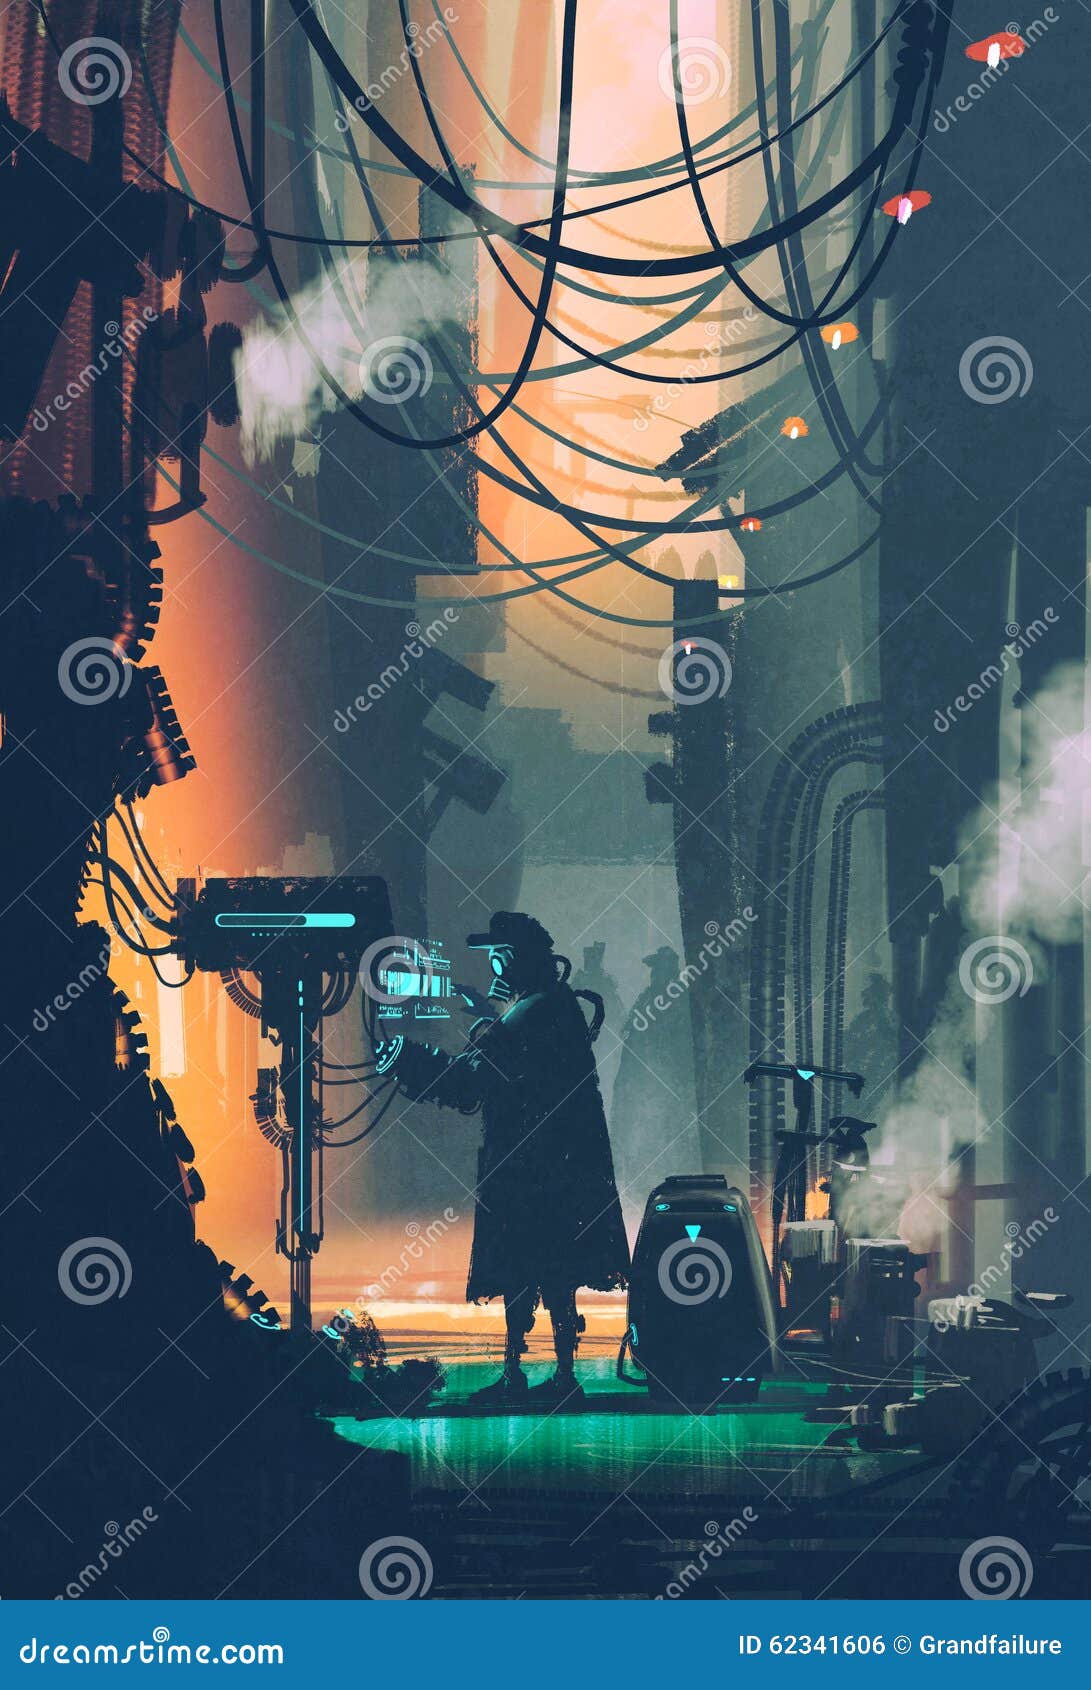 sci-fi scene of robot using futuristic computer in city street